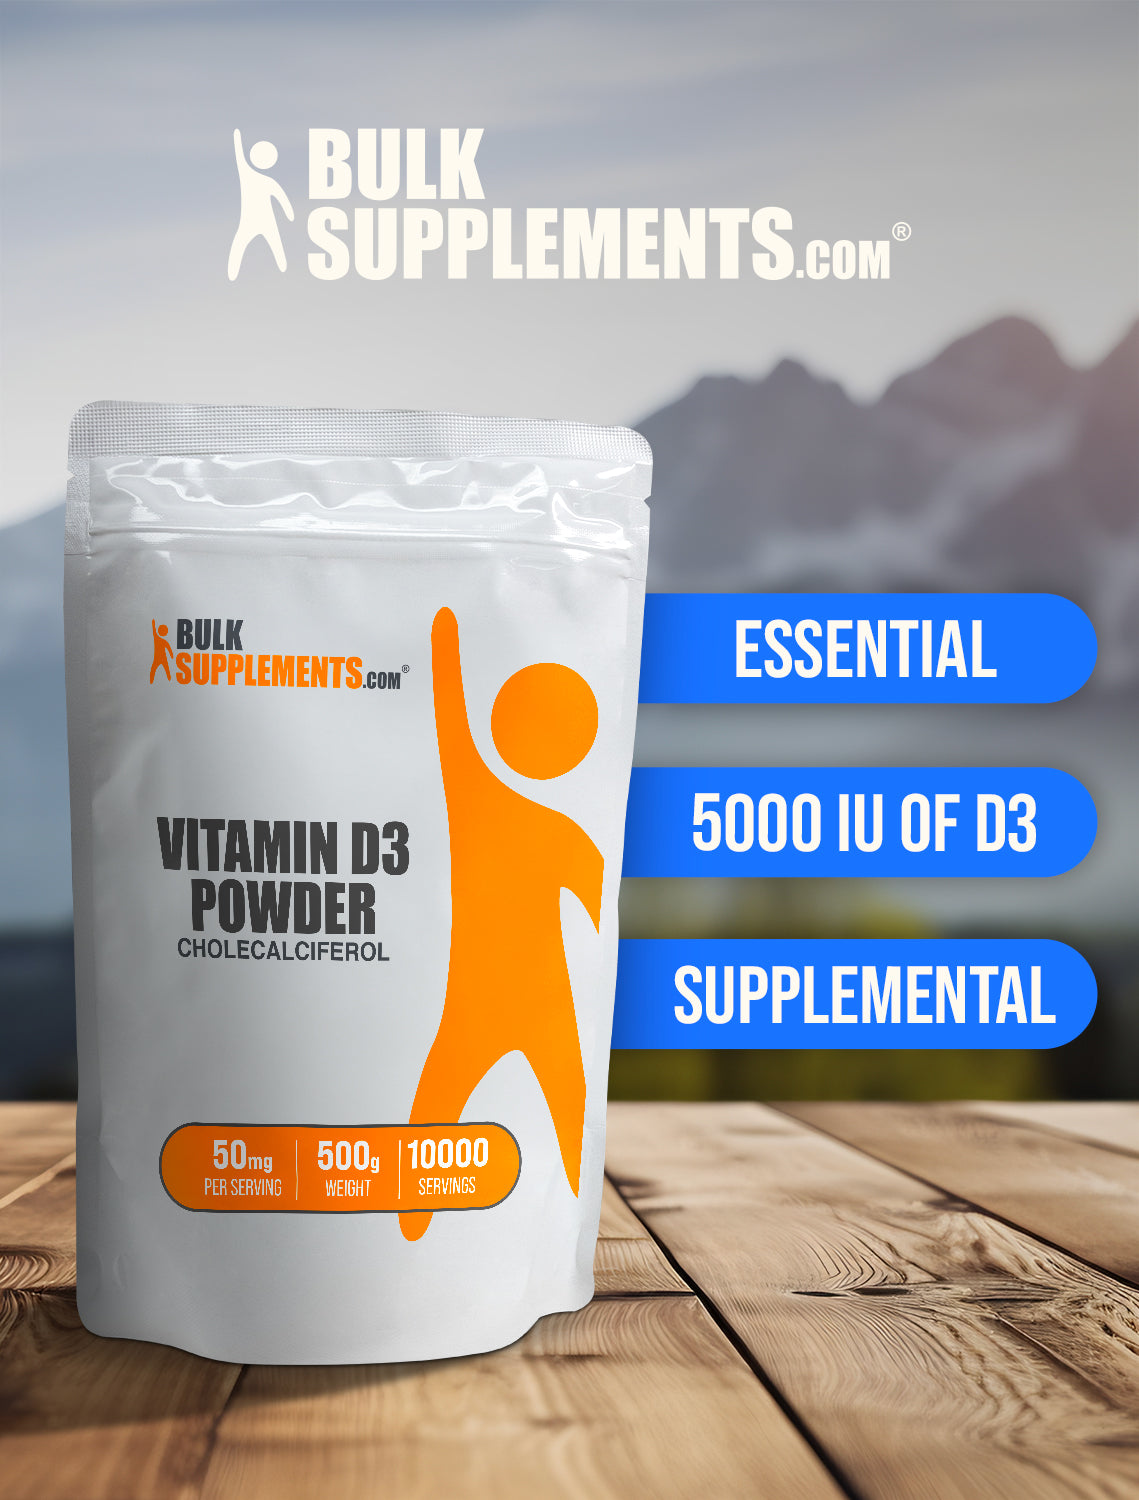 Vitamin D3 powder keyword image 500g